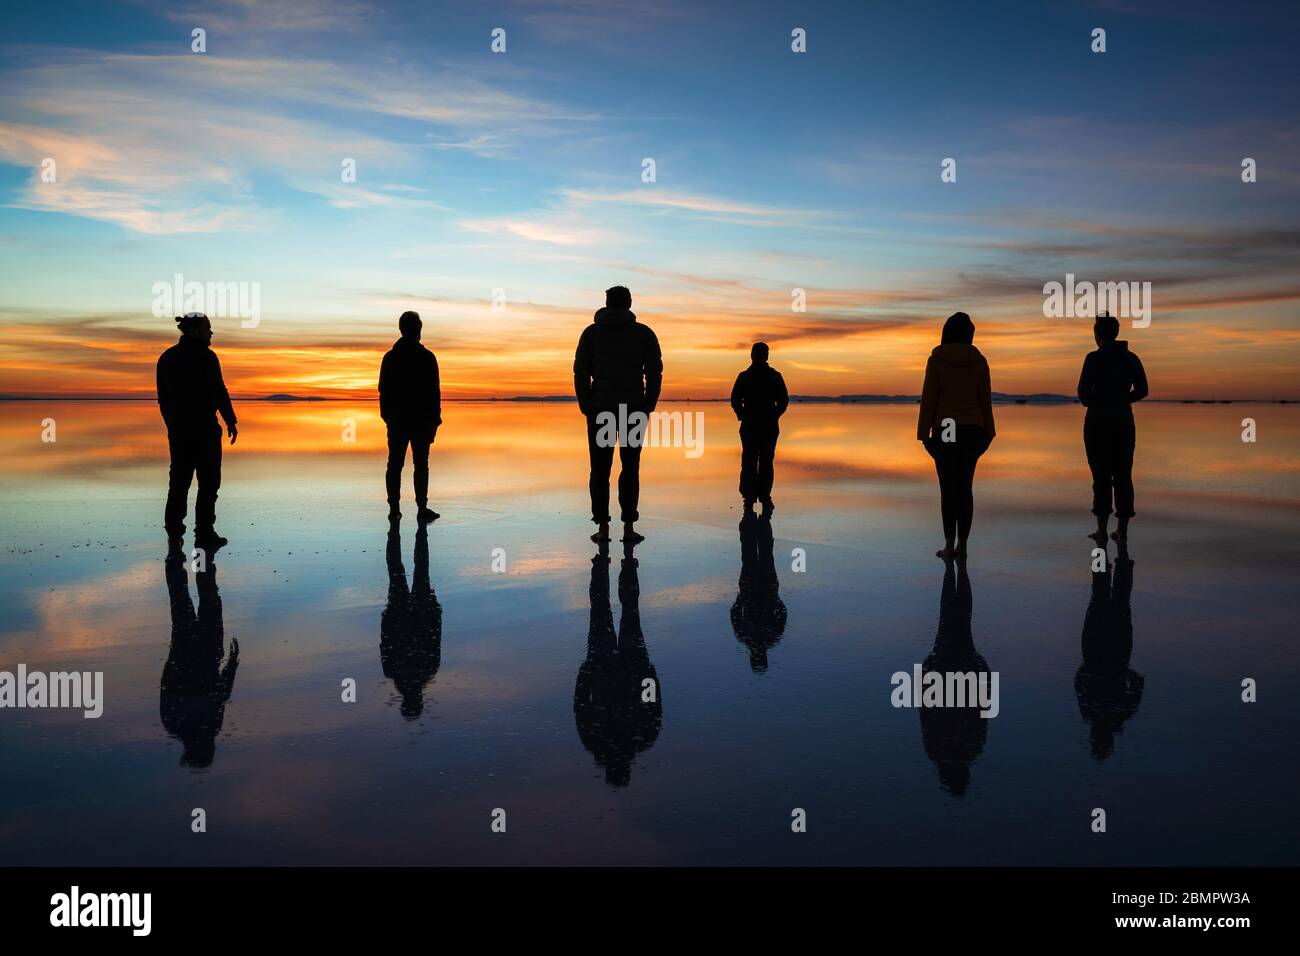 Group of travellers silhouette against sunrise at Uyuni Salt Flats (Spanish: Salar de Uyuni ) in Bolivia, teamwork and leadership concept. Stock Photo